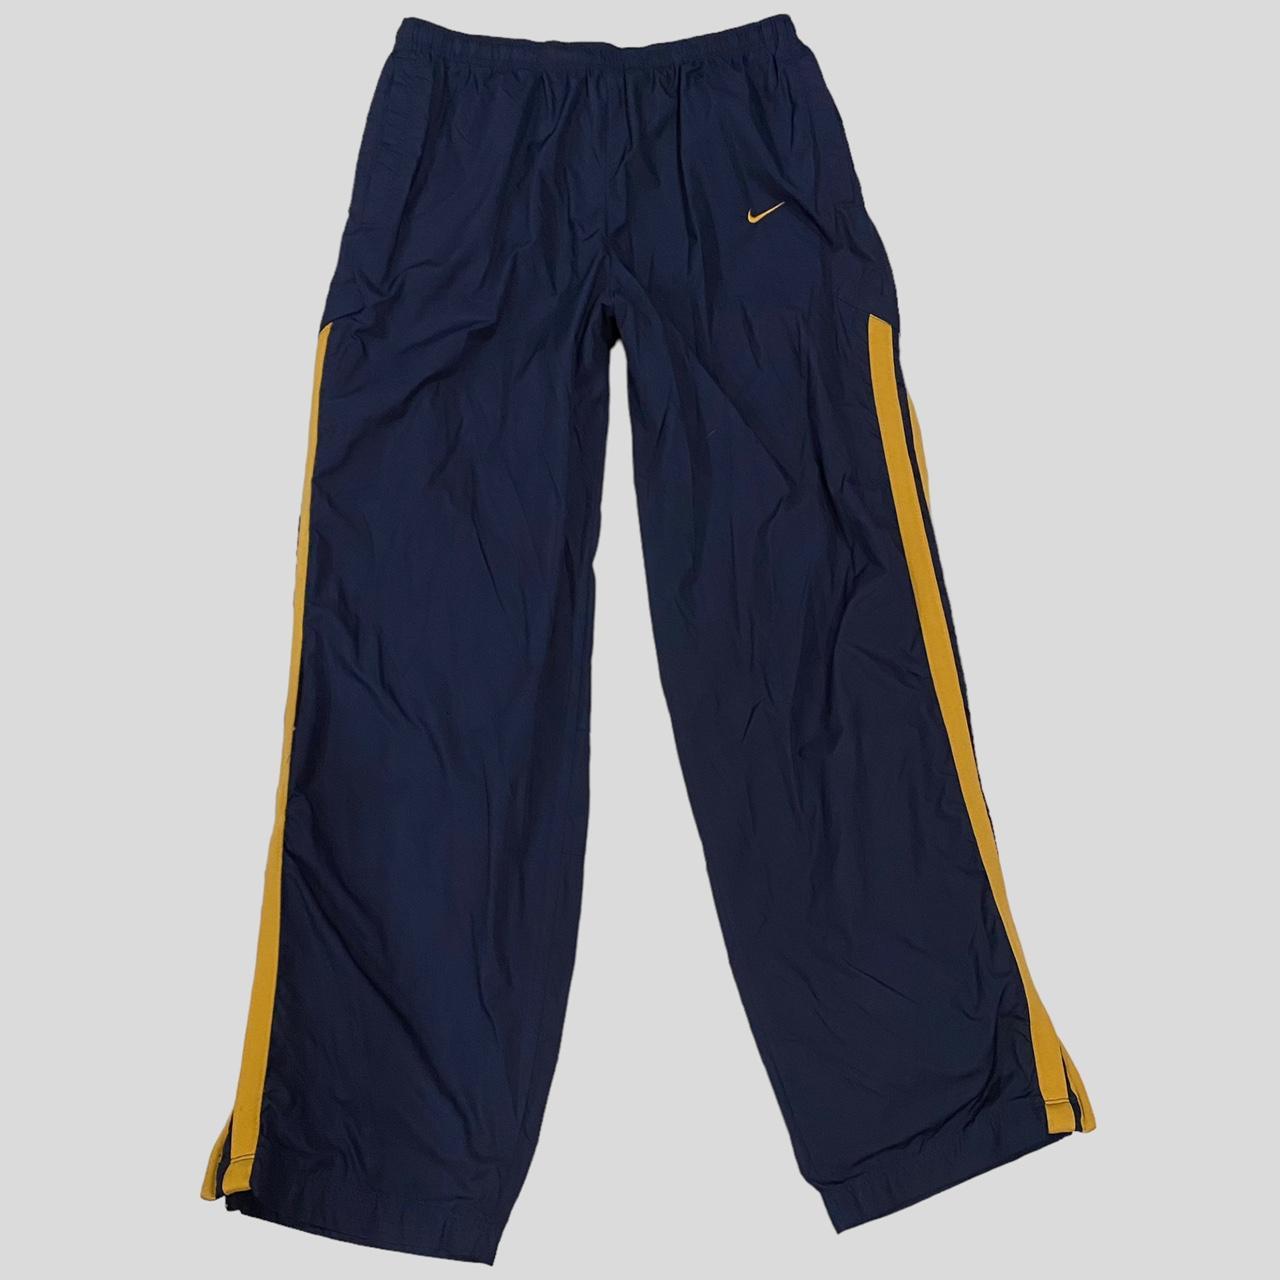 Early 2000s Nike track pants ☆ Size: Men's large ☆ - Depop